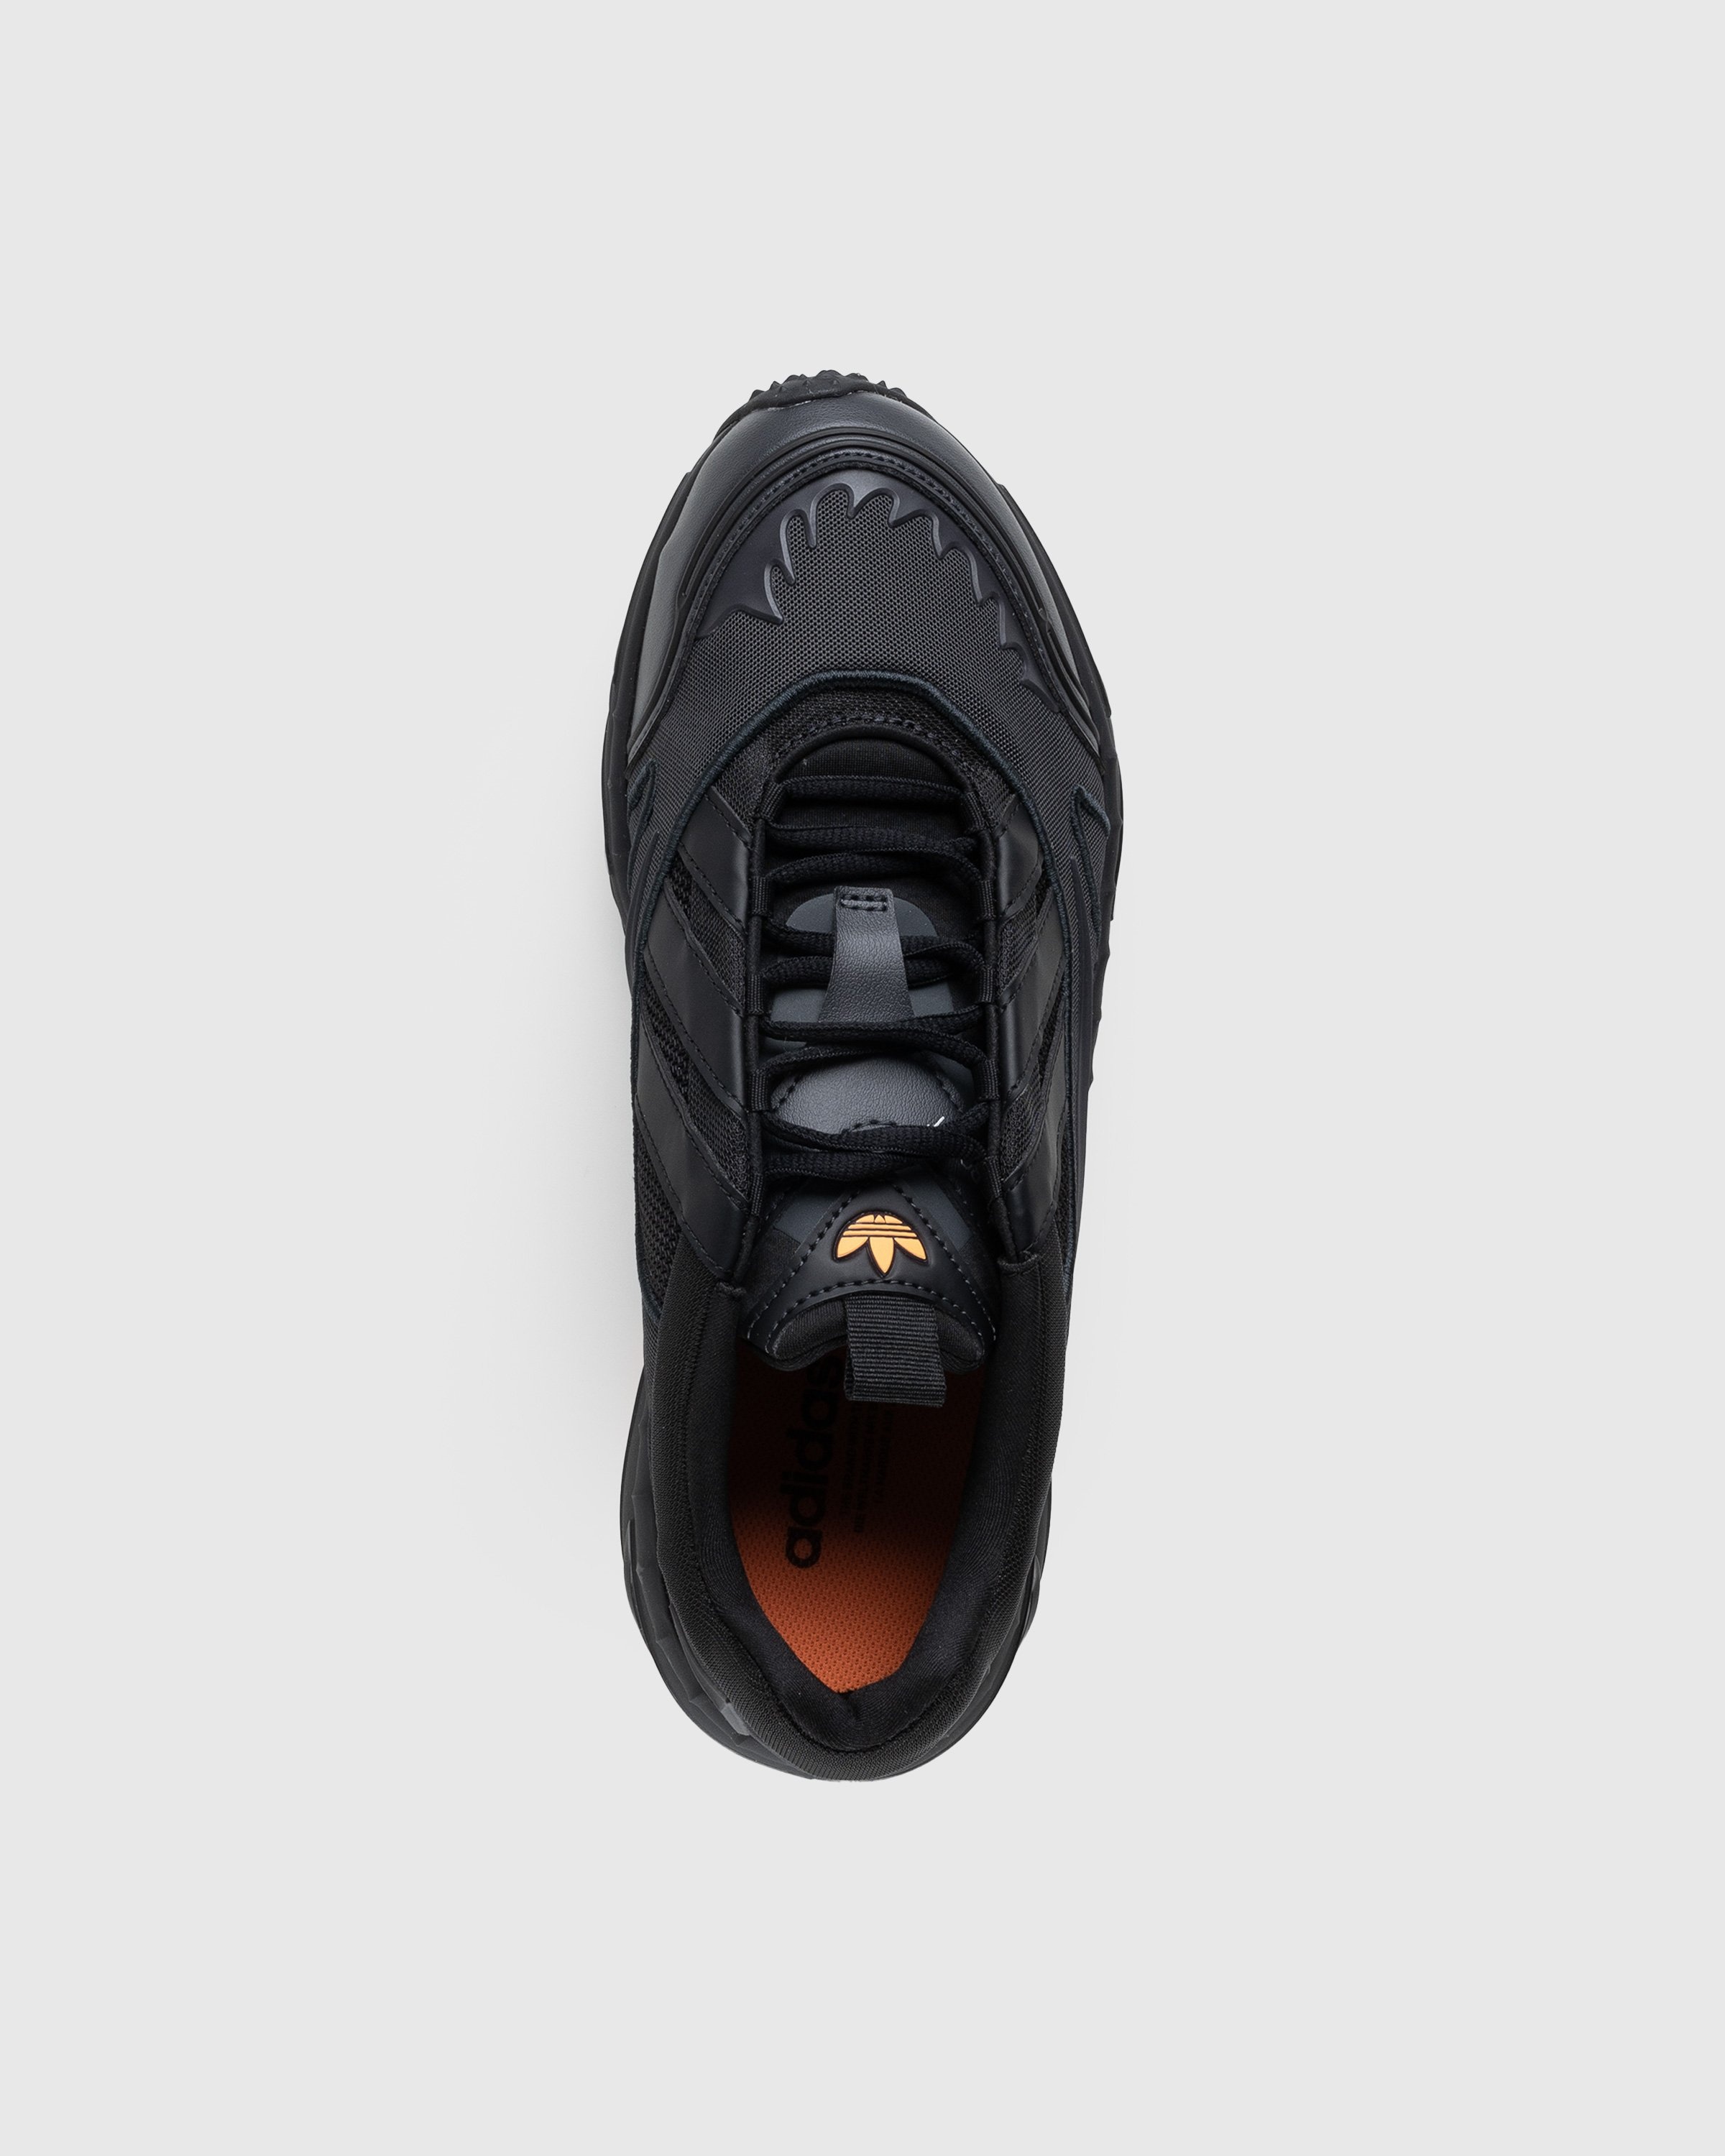 Adidas – Xare Boost Black - Low Top Sneakers - Black - Image 5